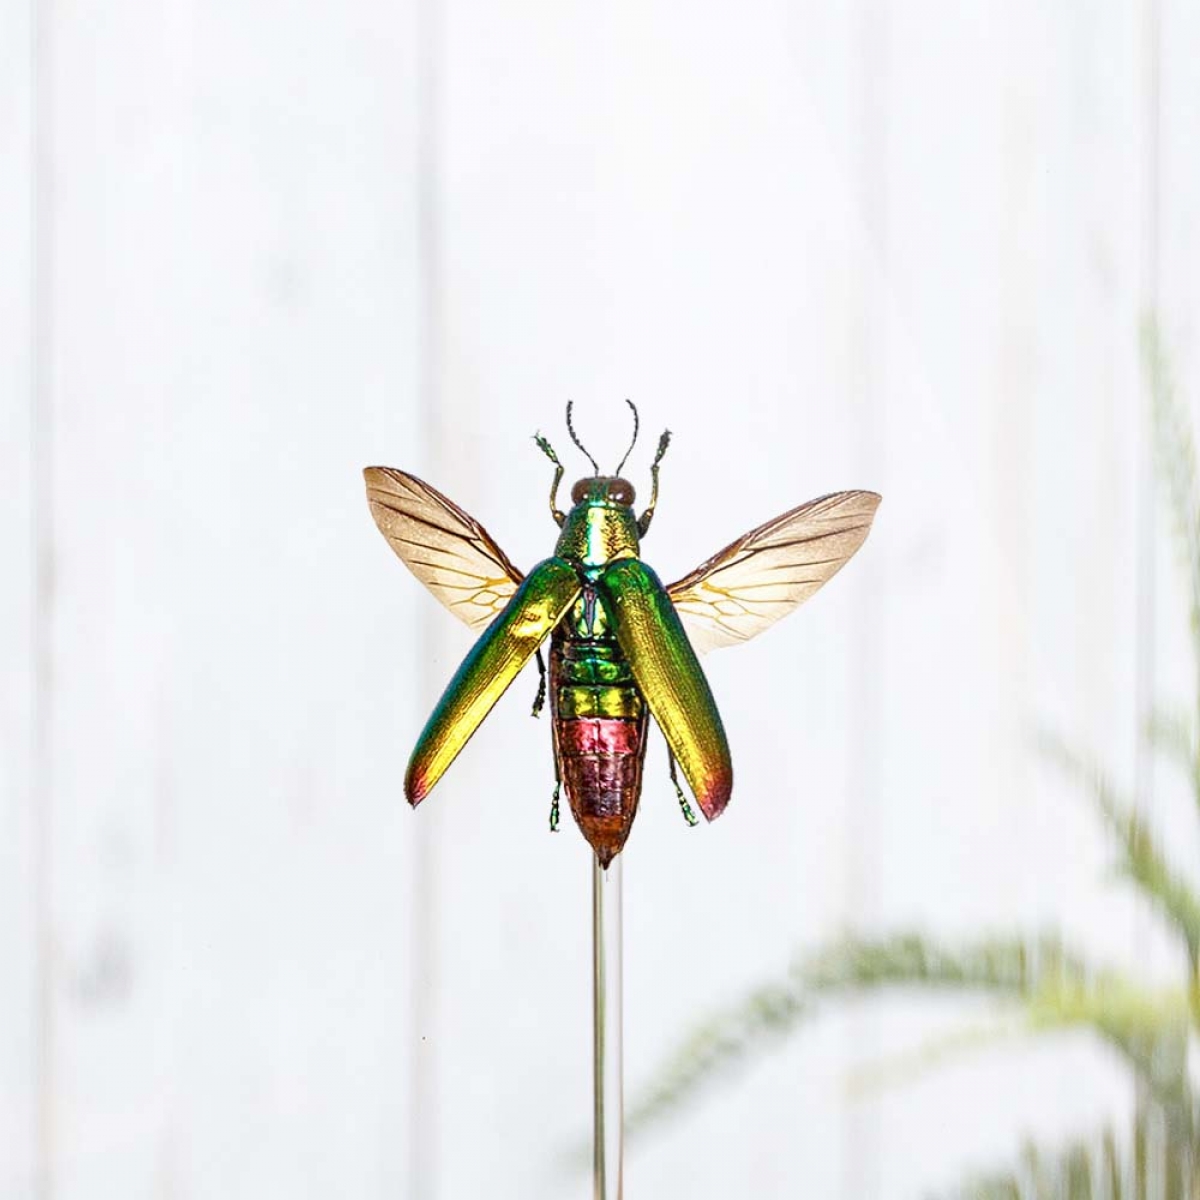 Jember Jewel Beetle in Glass Dome with Wooden Base (Chrysochroa fulminans jember)